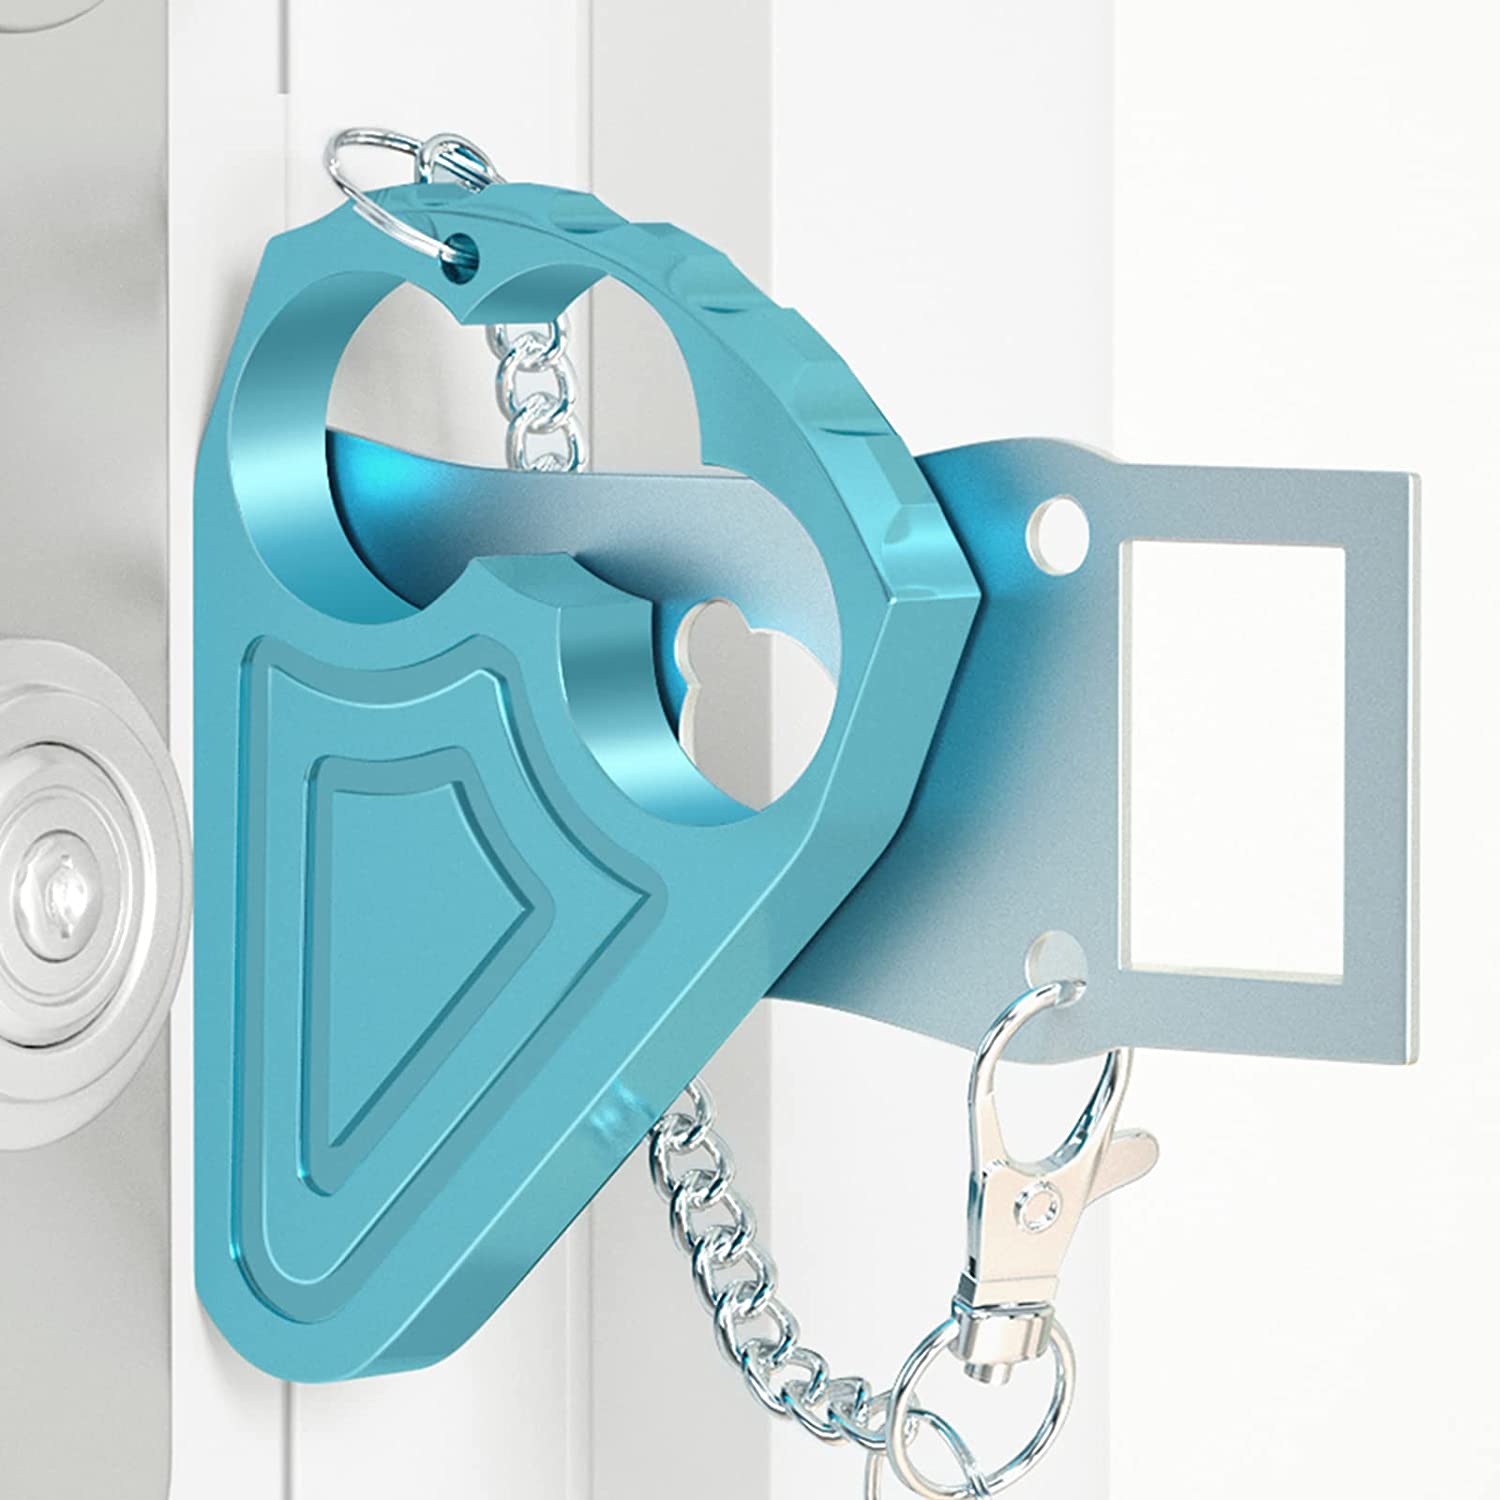 Urgeeo Portable Door Lock, Hotel Door Locks for Travelers Metal, Prevent Unauthorized Entry, Apartment Essentials, Home Security, Traveling Essentials, Blue
